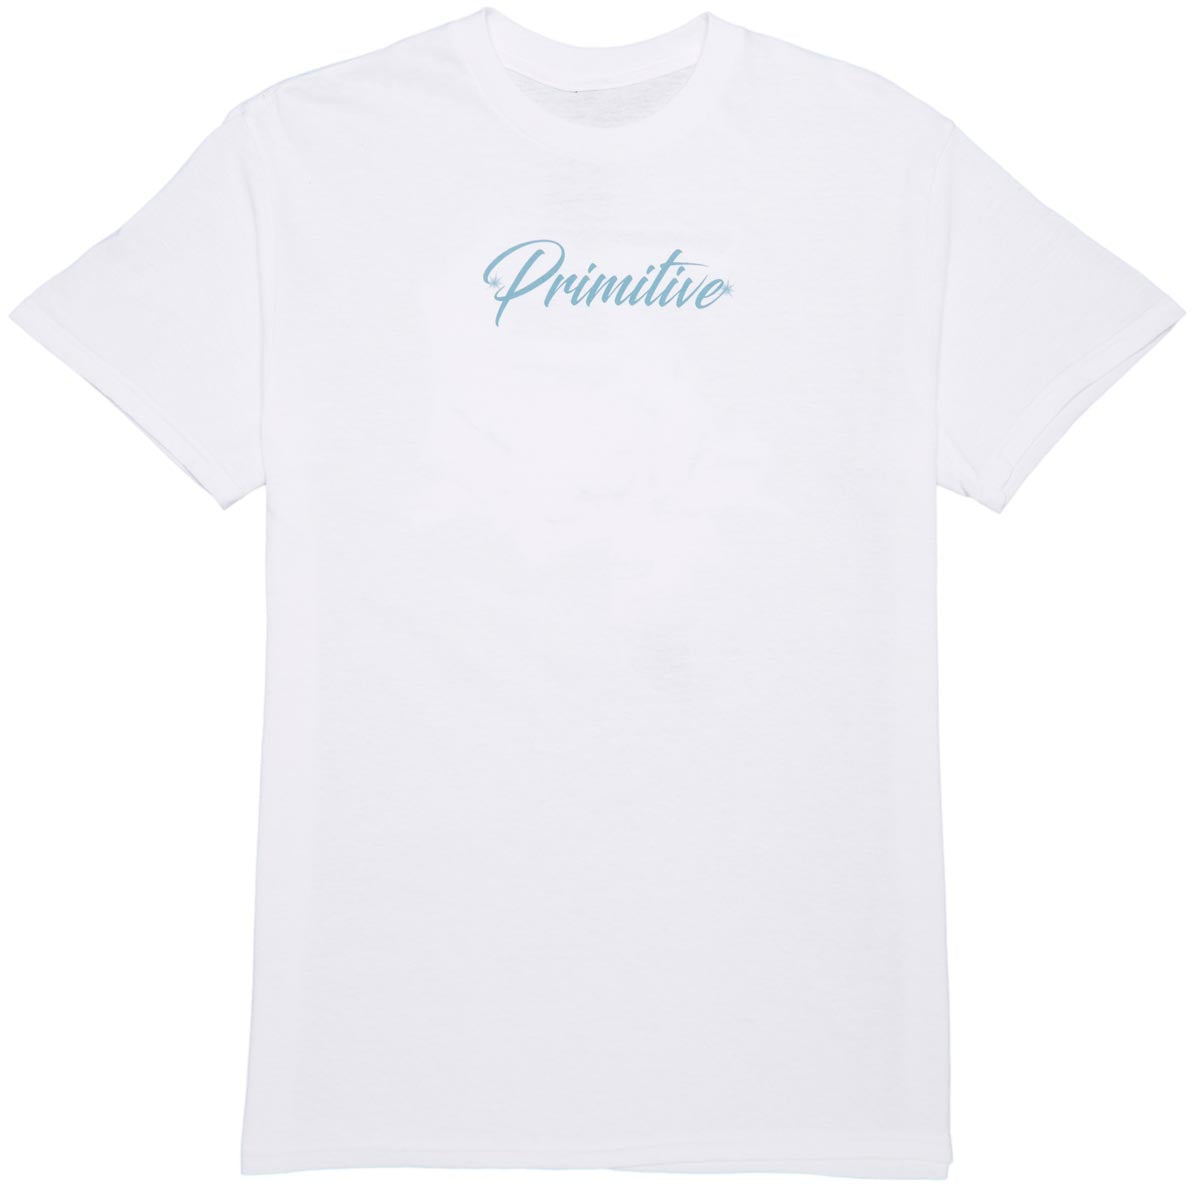 Primitive Shiver T-Shirt - White image 2